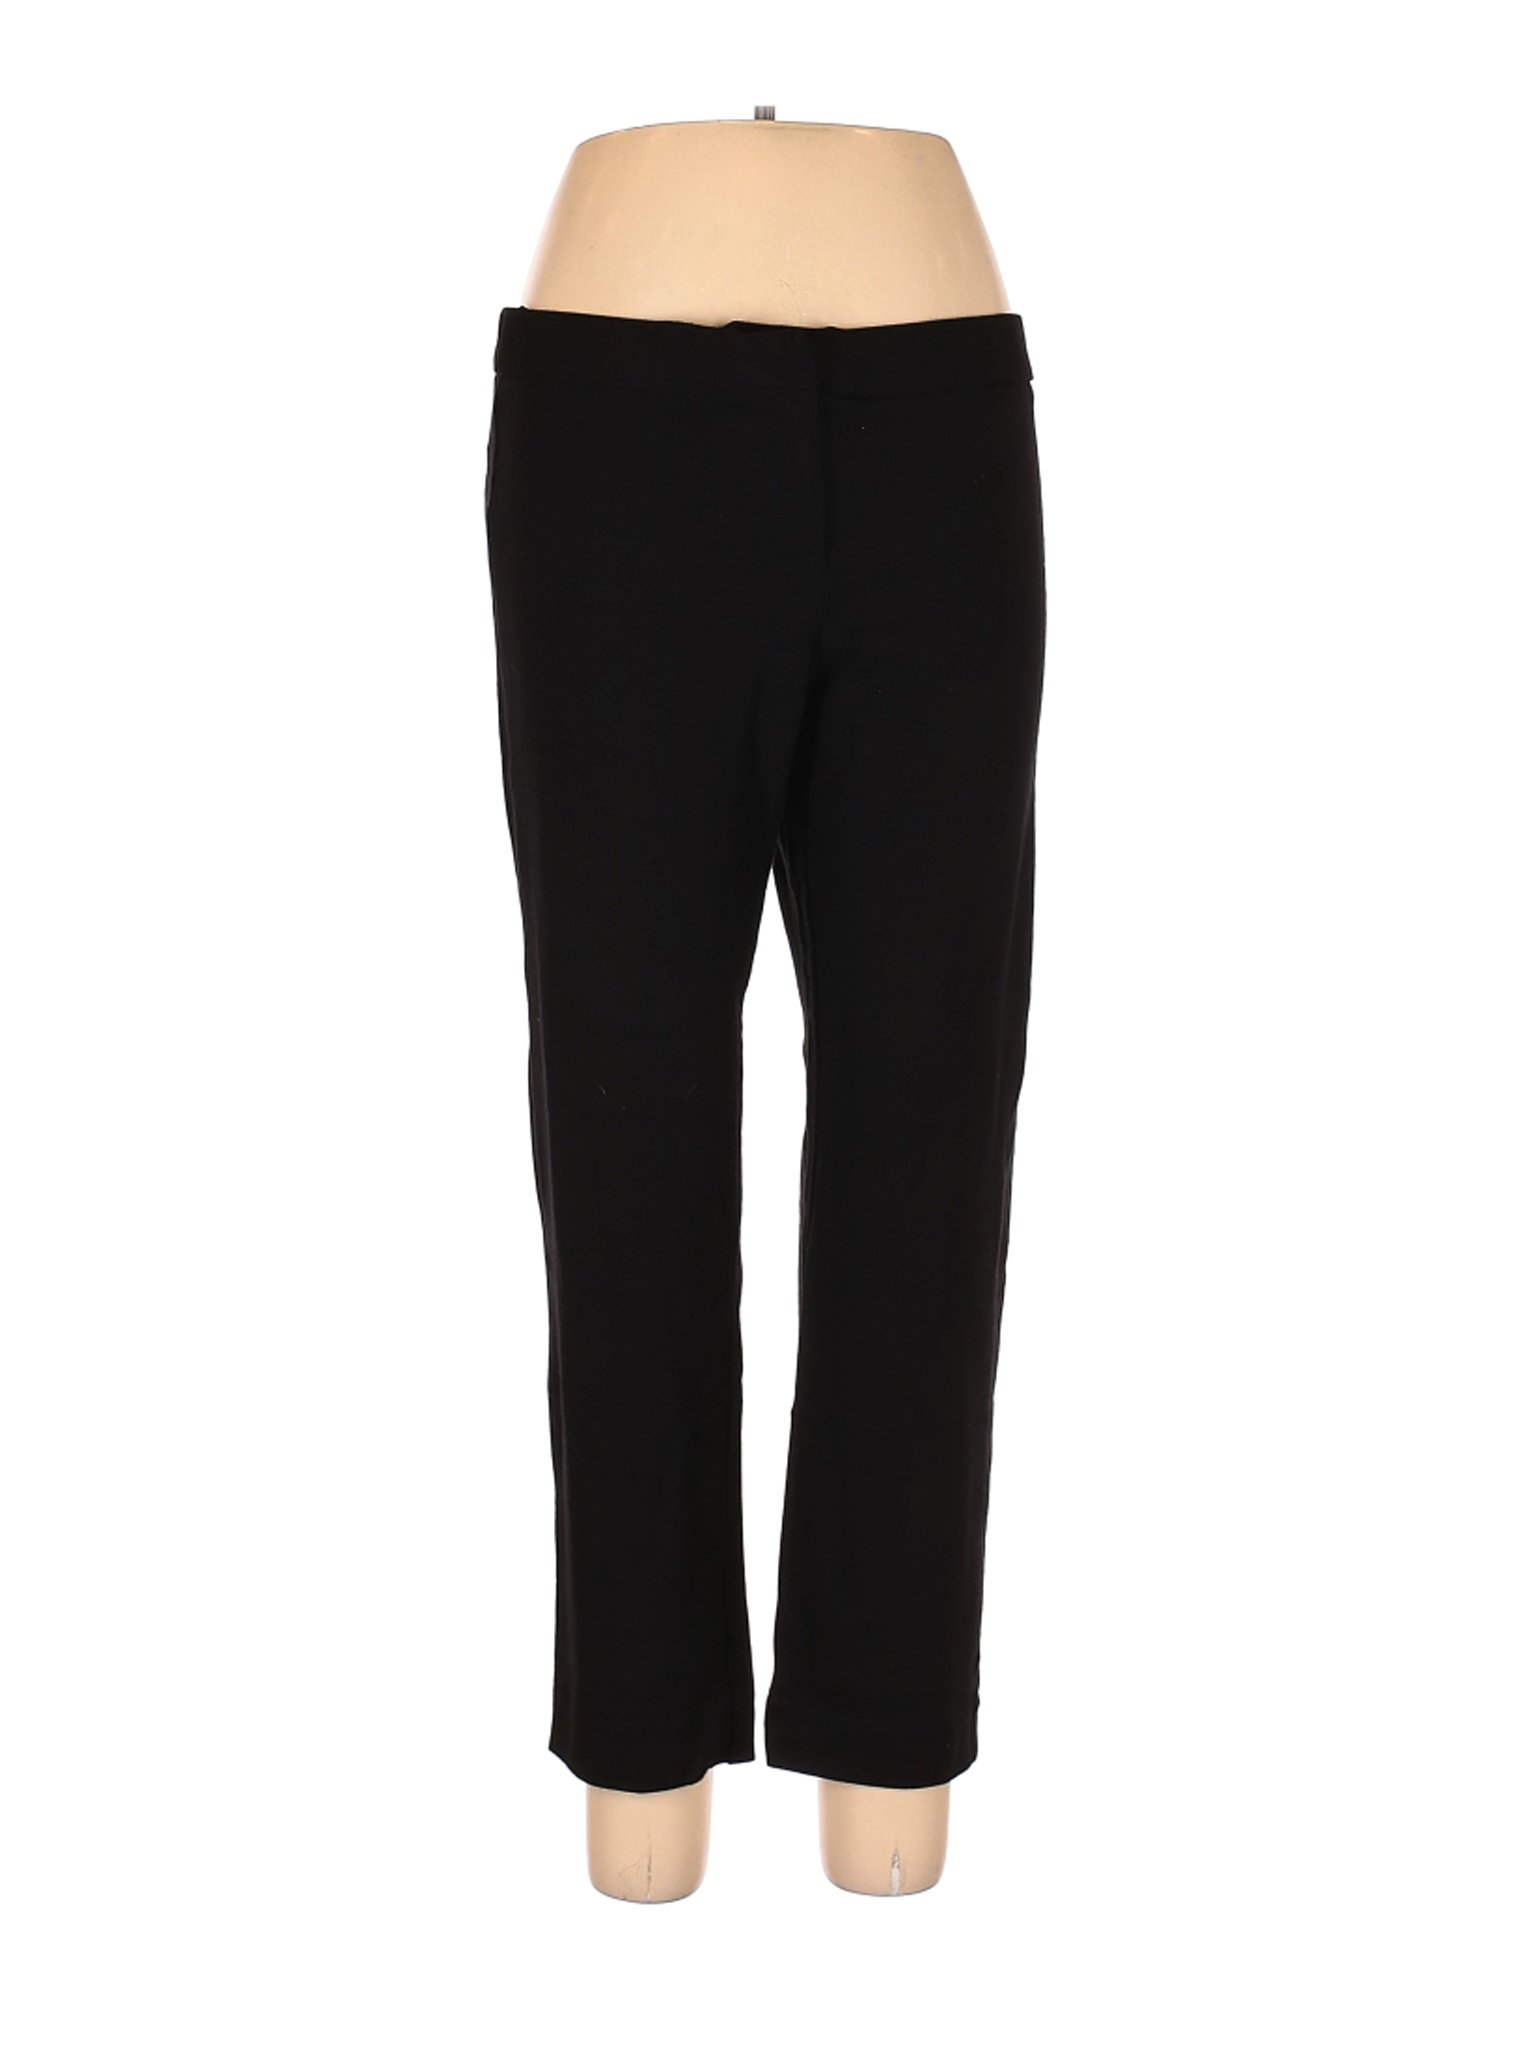 Amanda + Chelsea Women Black Dress Pants 12 | eBay